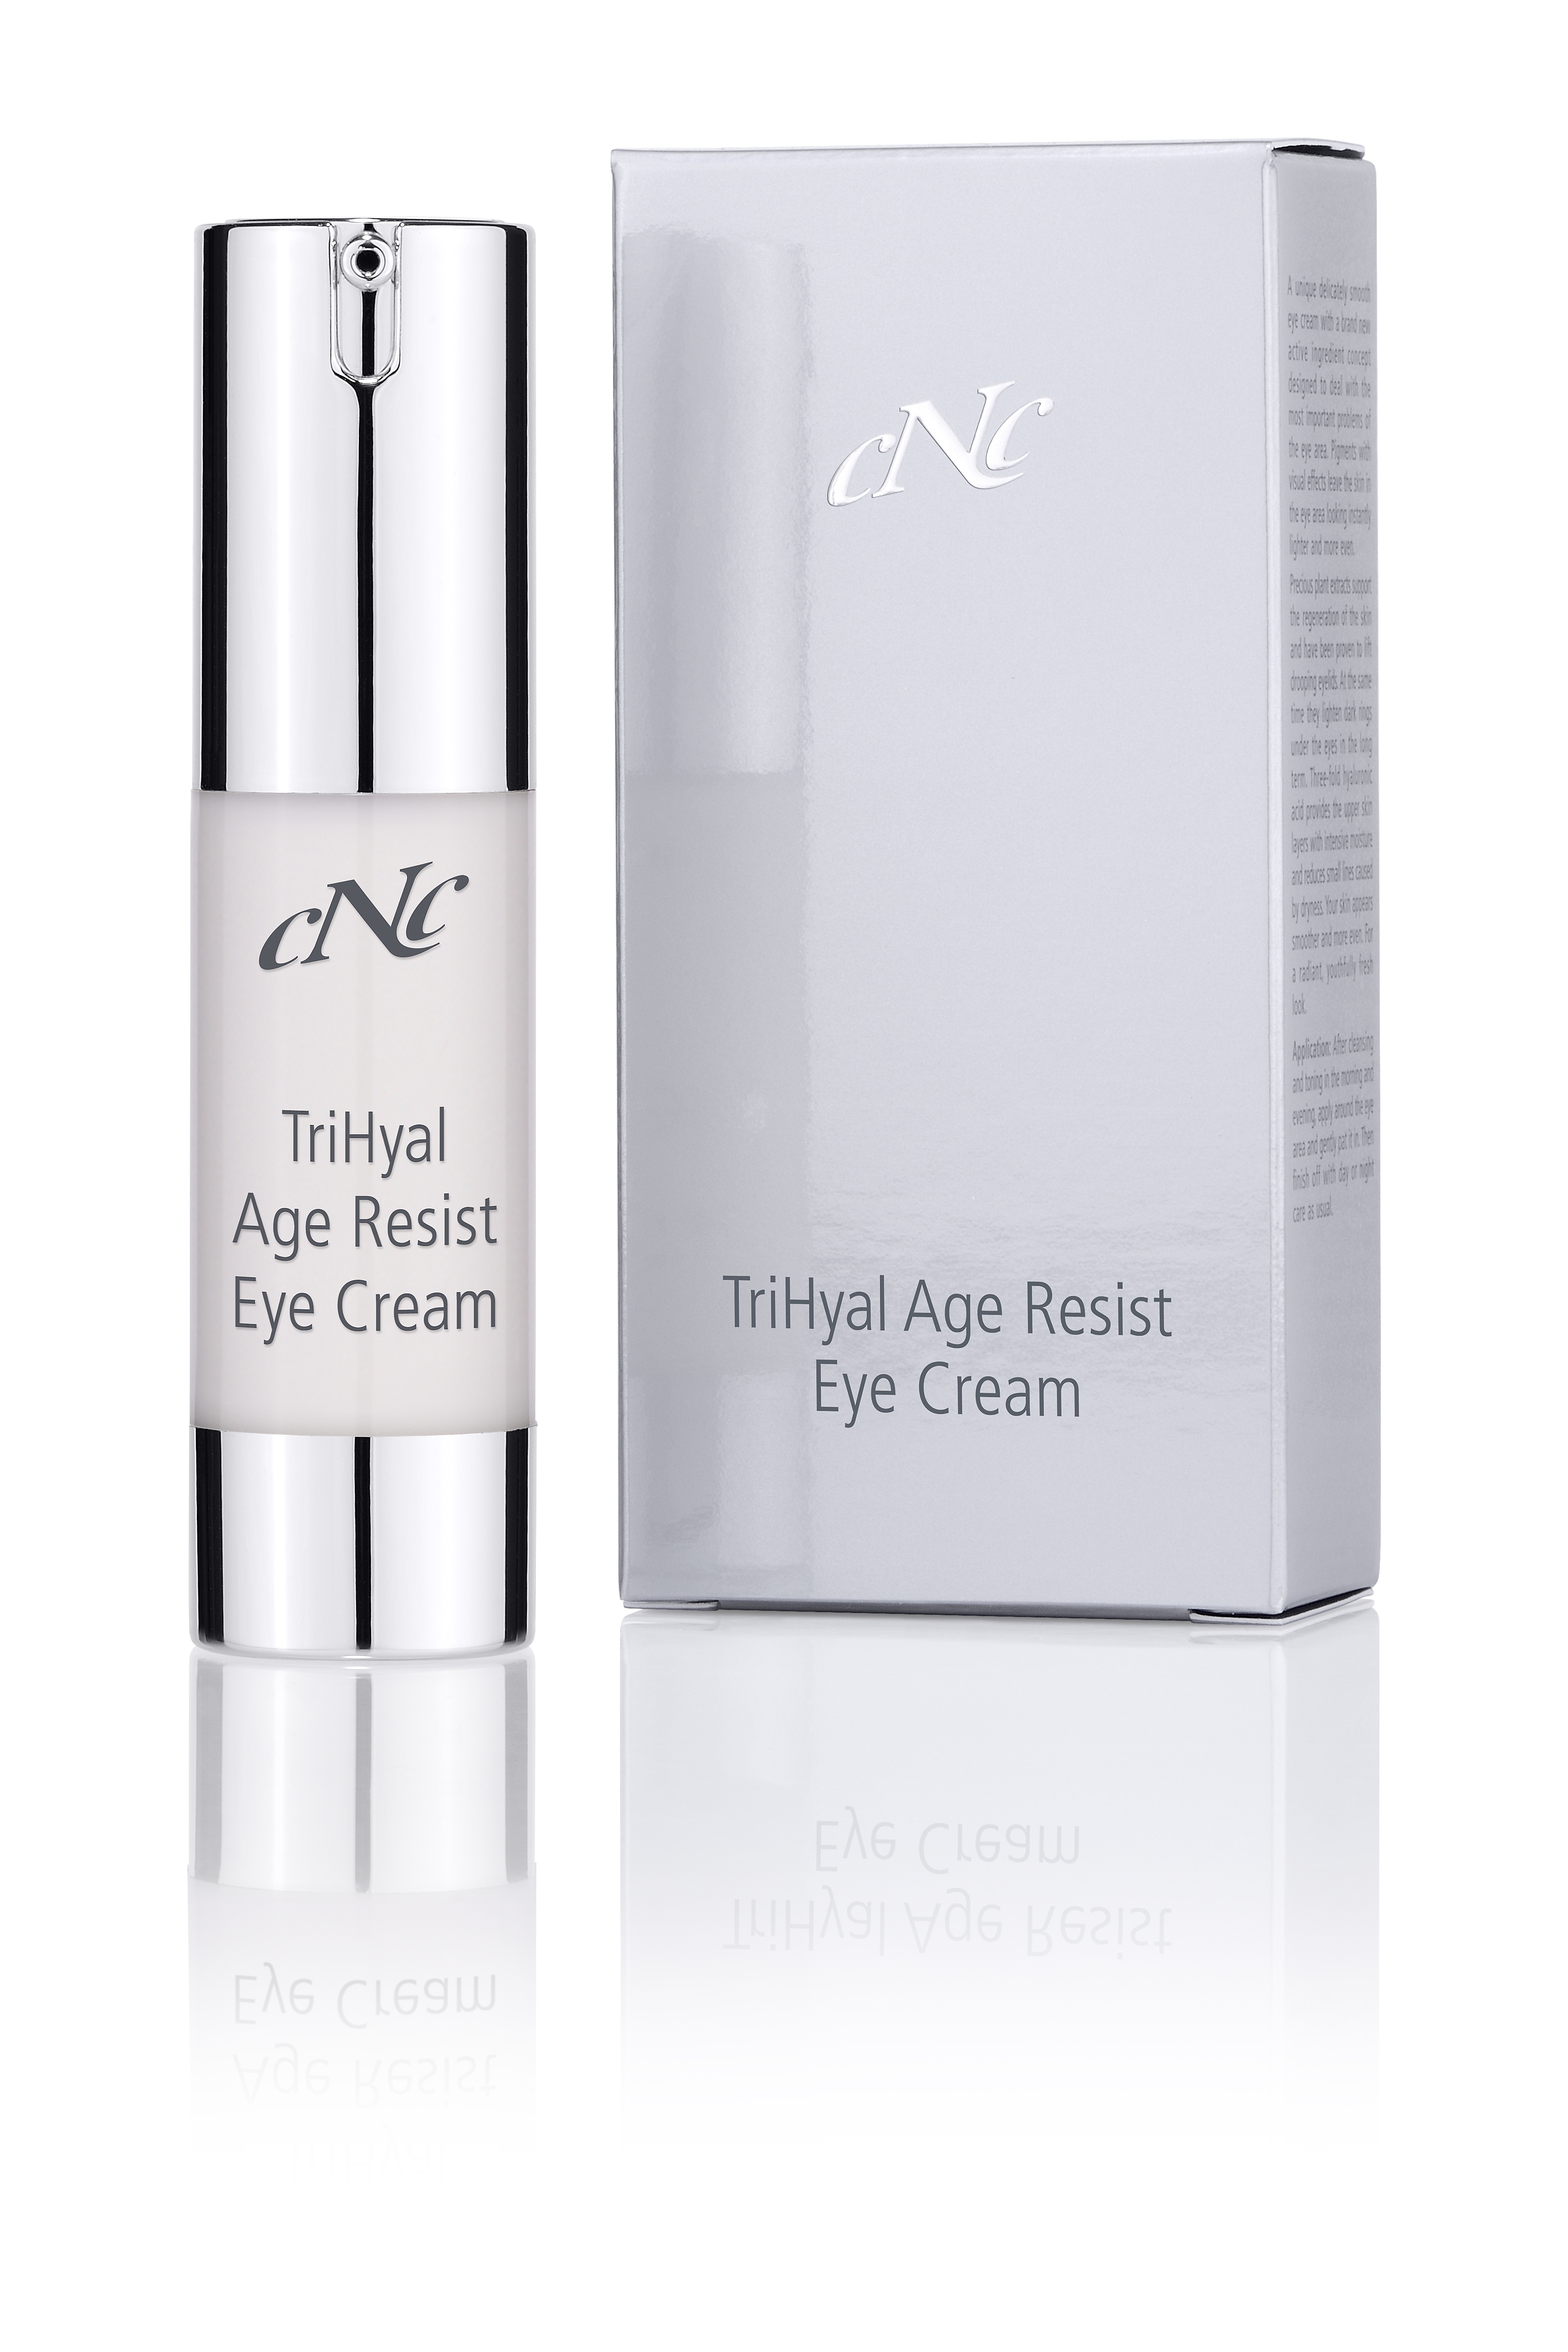 CNC aesthetic world TriHyal Age Resist Eye Cream